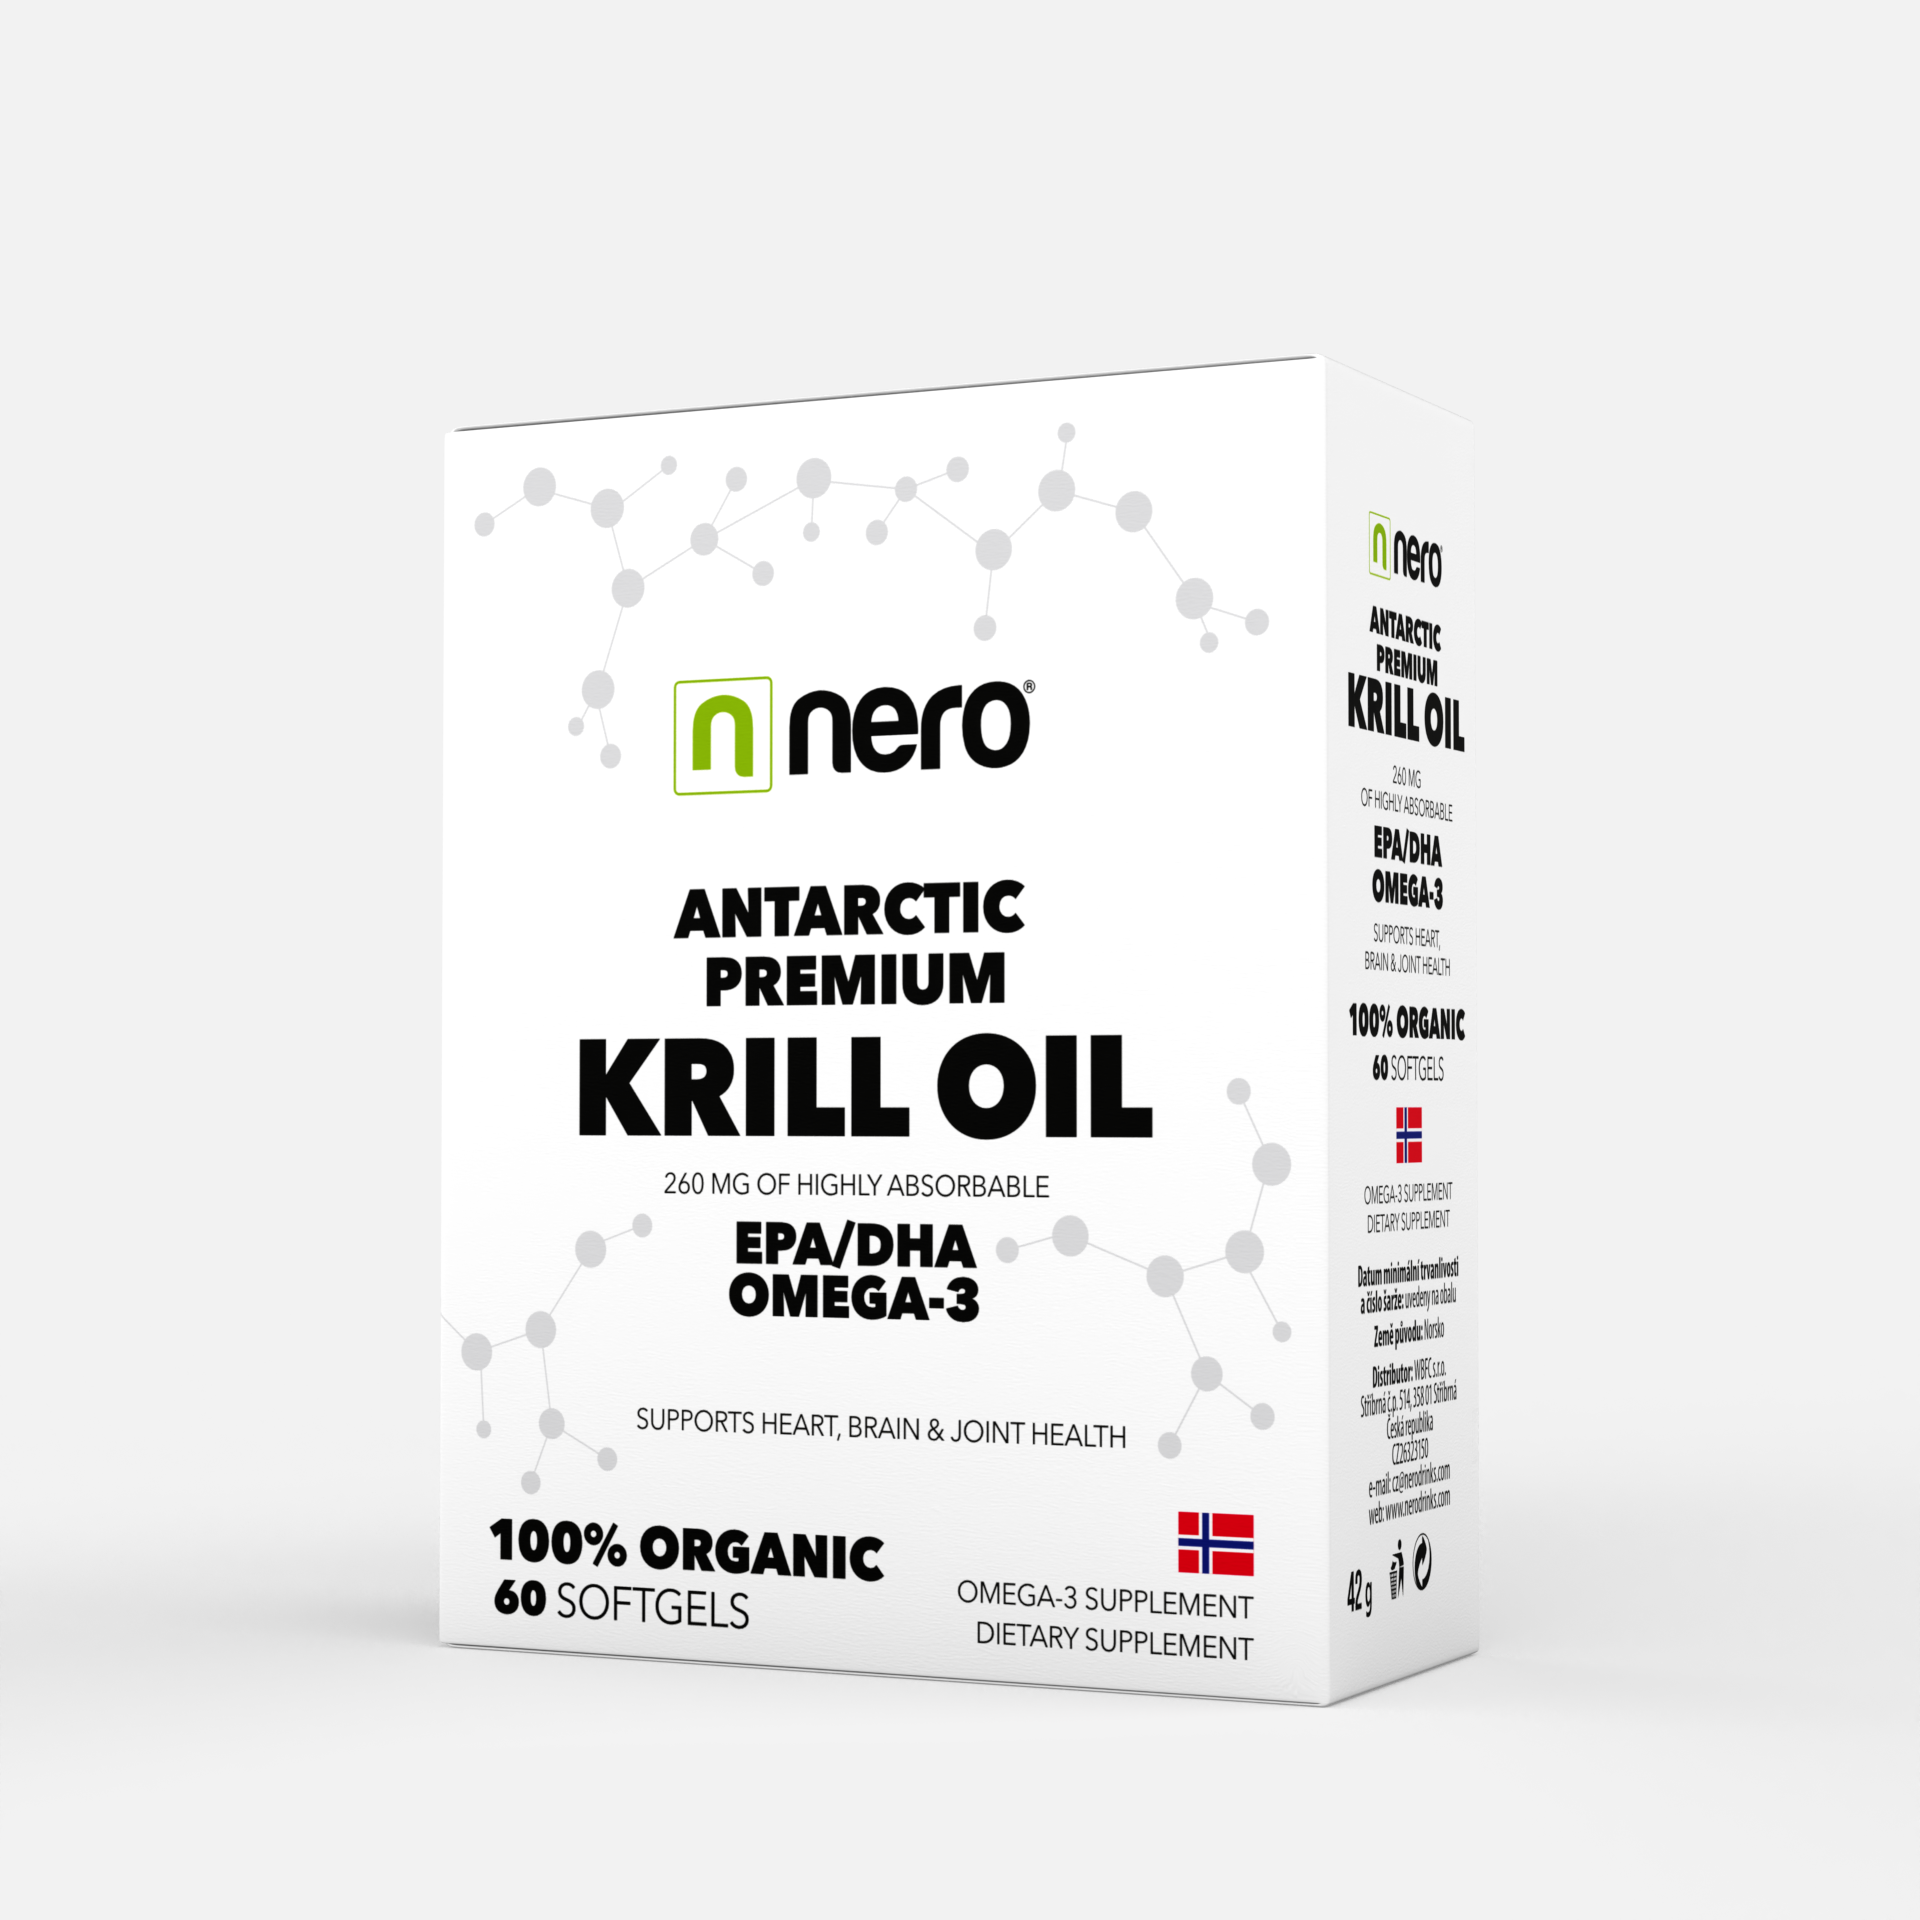 Nero ANTARCTIC PREMIUM KRILL OIL / 1180 mg, 60 tablet 8594179510641